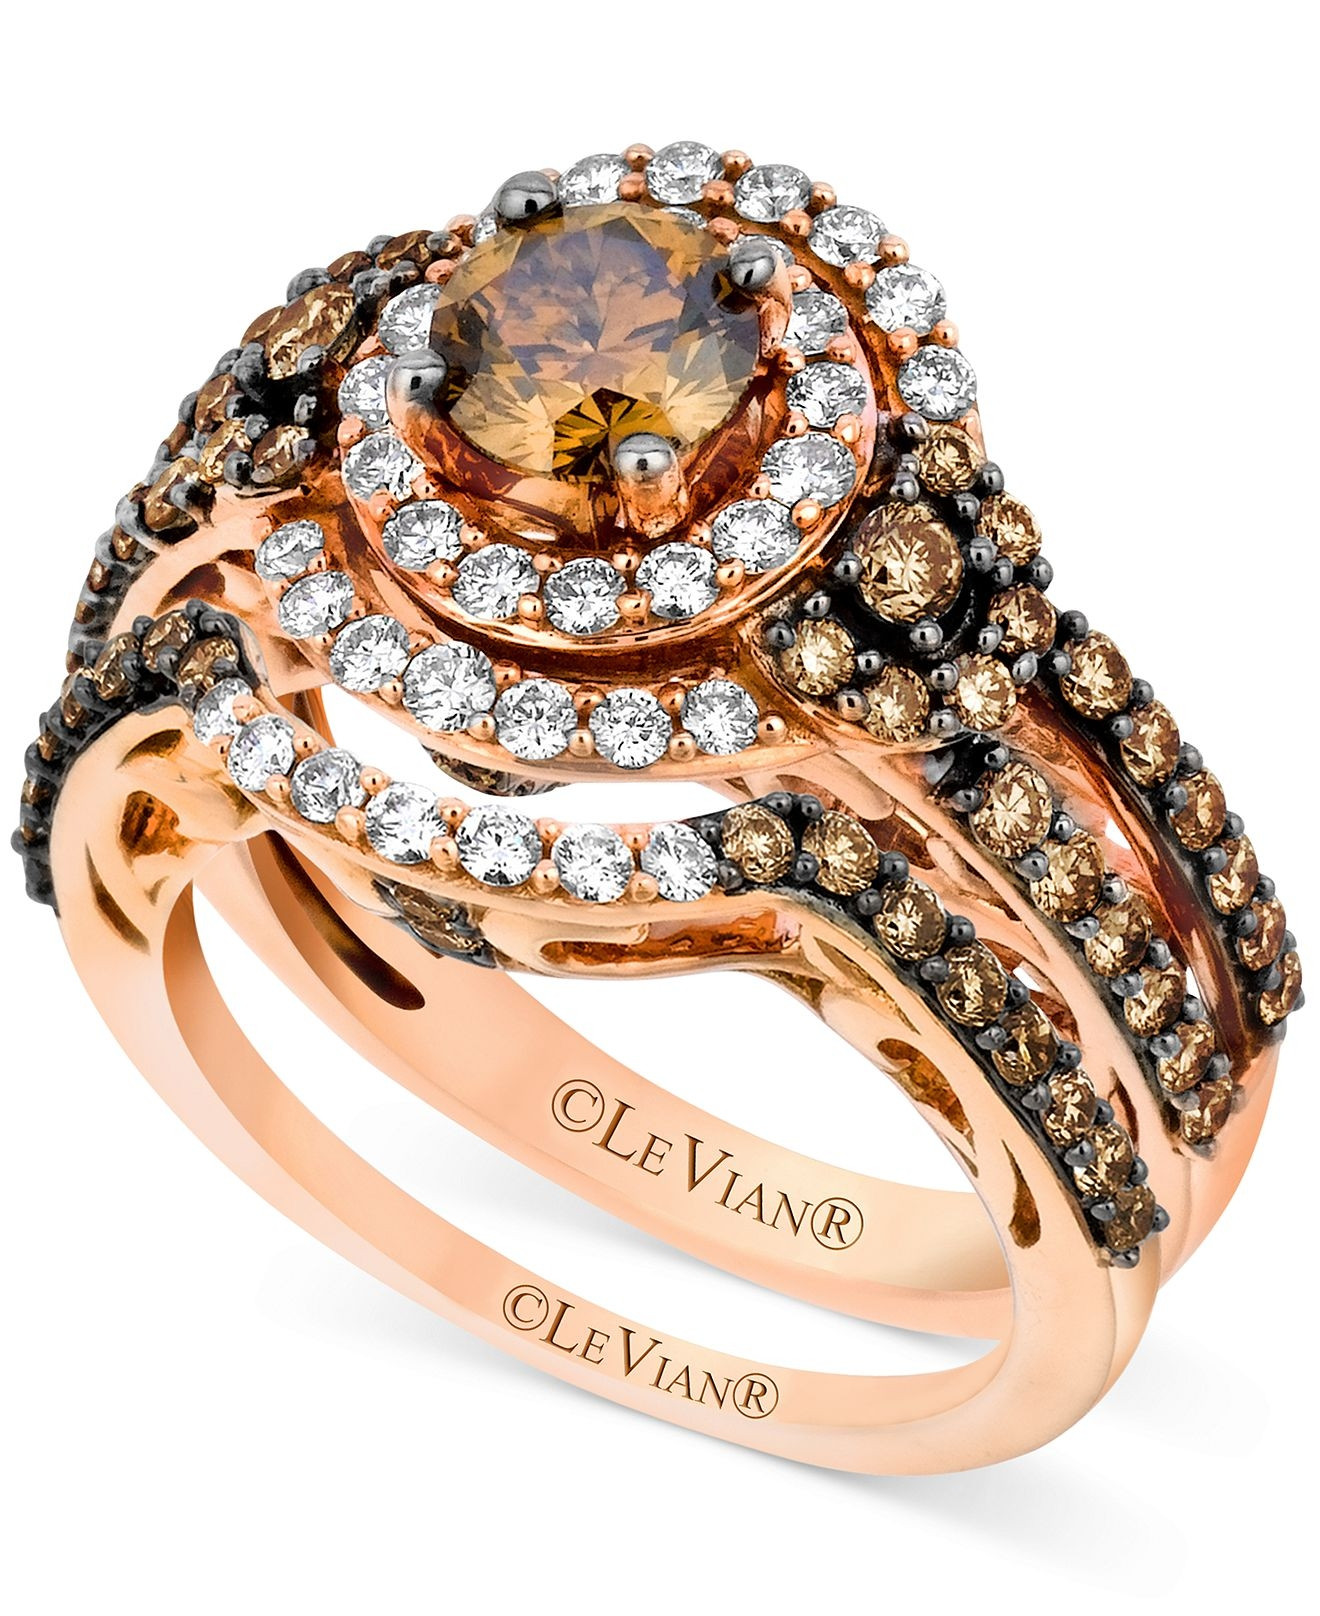 Chocolate Diamond Wedding Rings
 Elegant zales chocolate diamond ring Matvuk